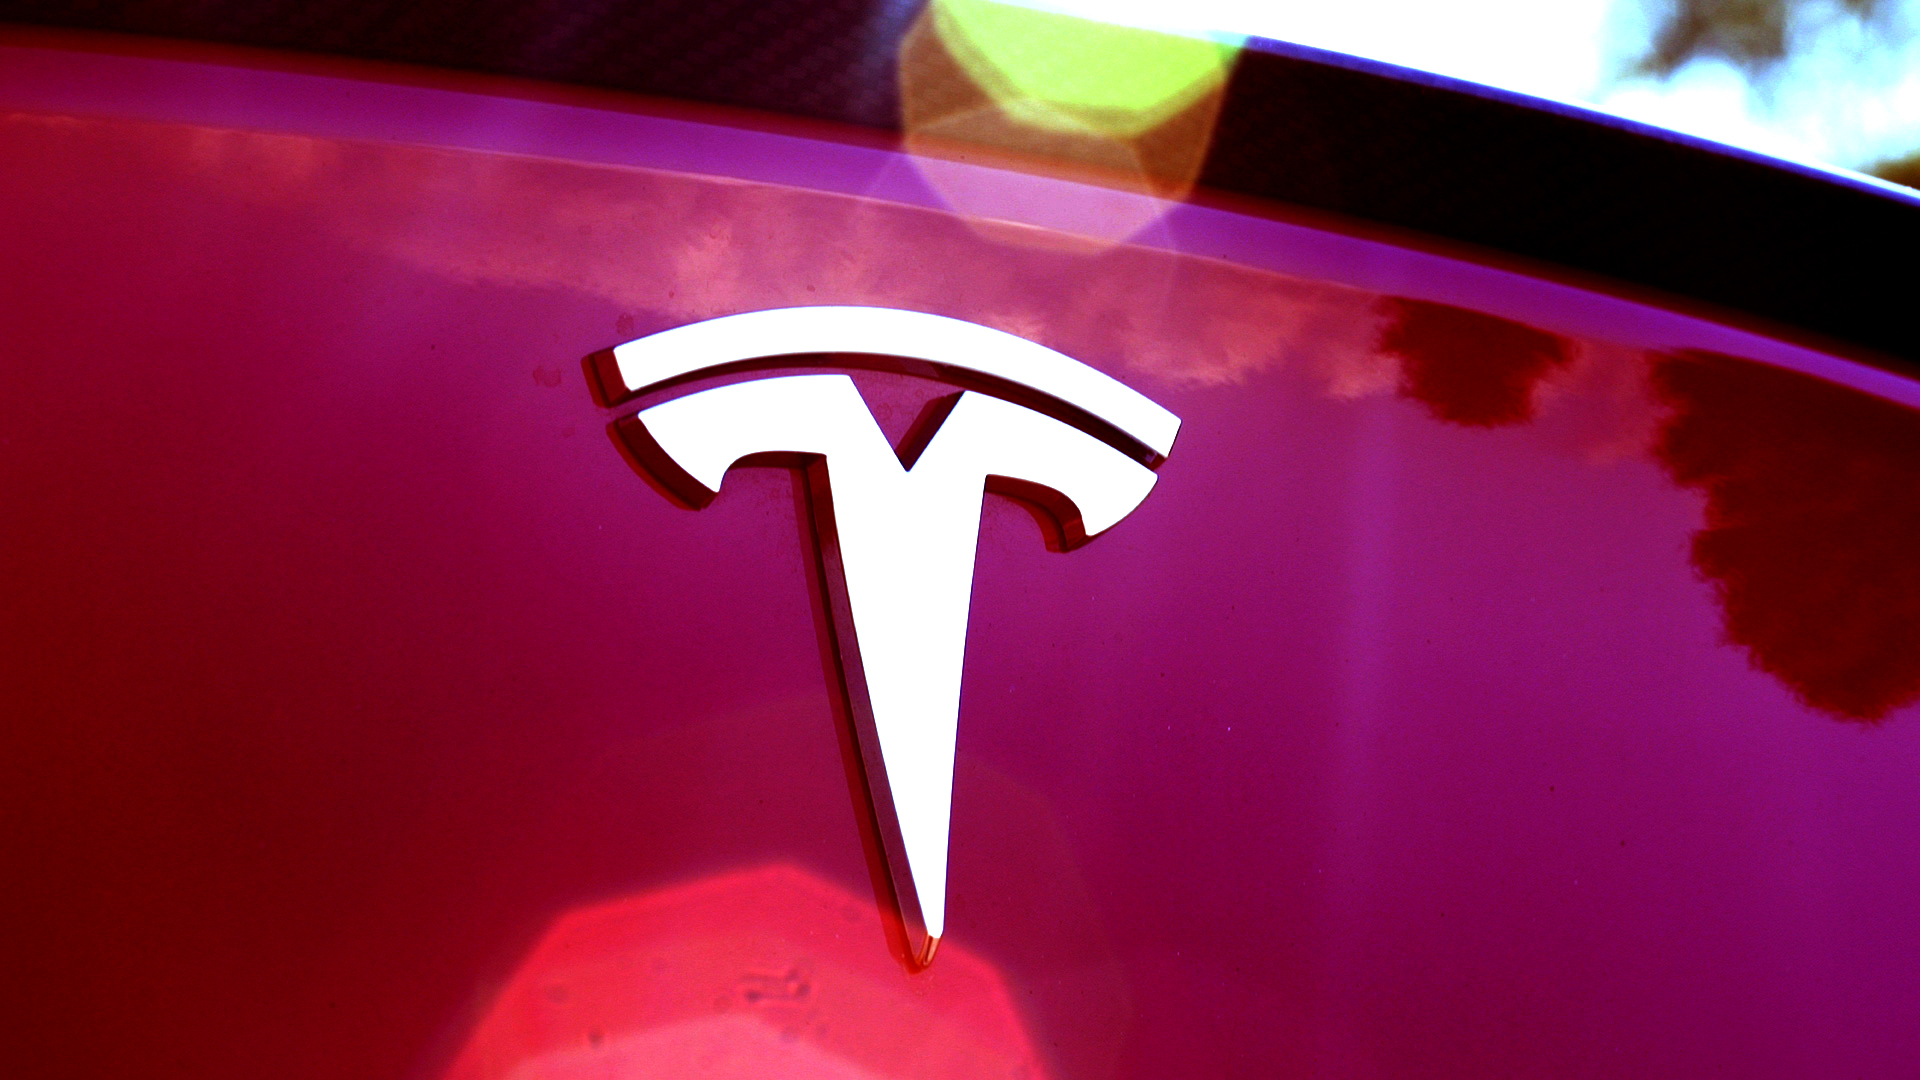 Tesla Announces Software Upgrade That Allows A Car To Park Itself